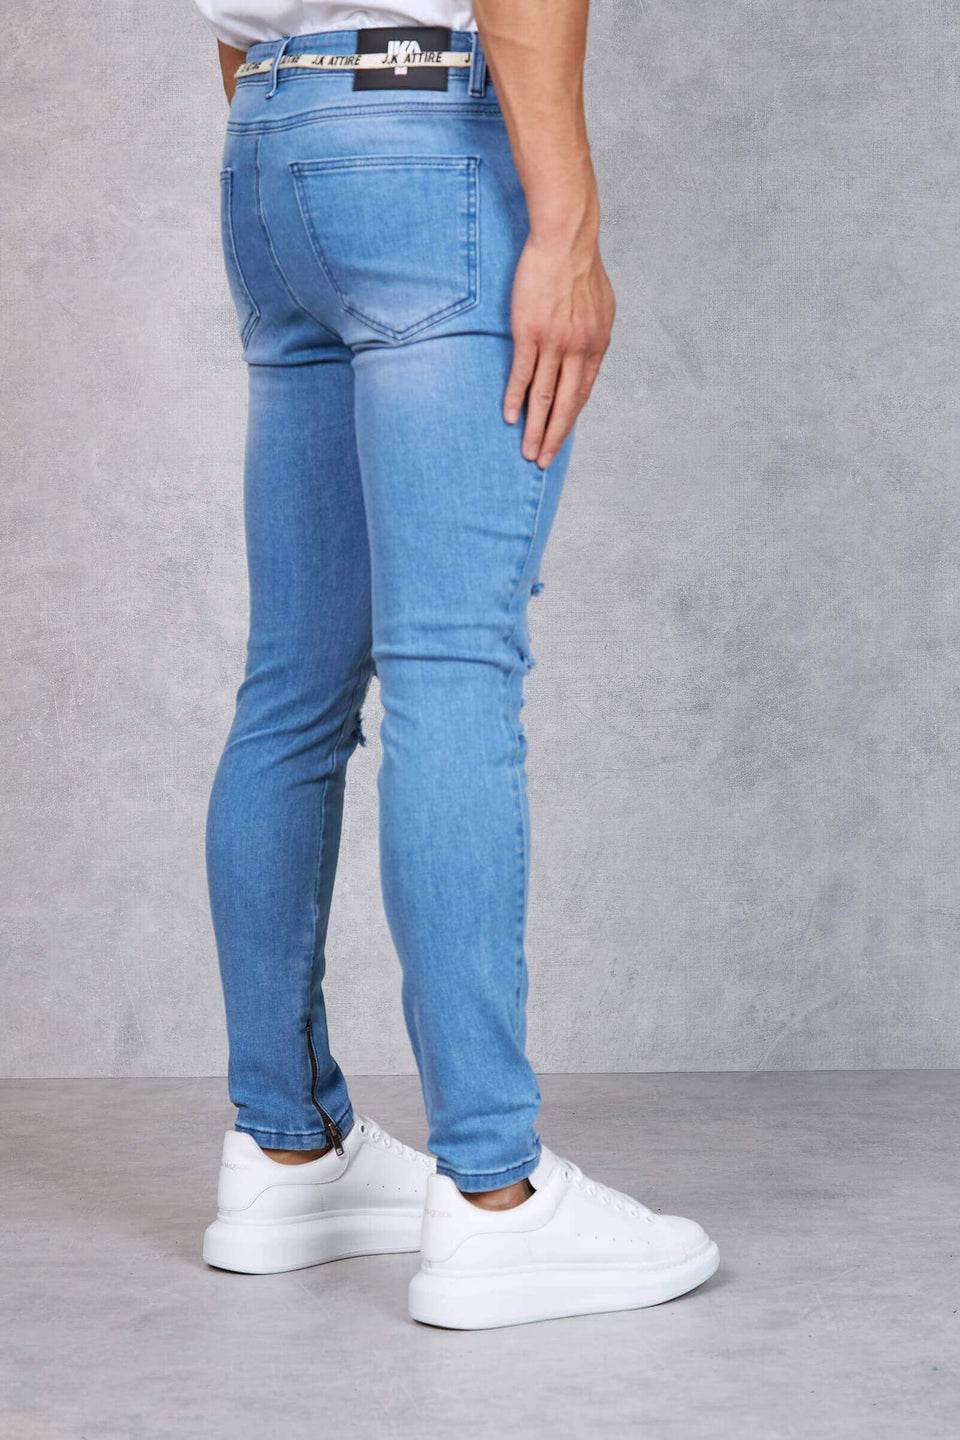 F2 - Ohio Dirty Wash Knee Rip Skinny Jeans - Light Blue